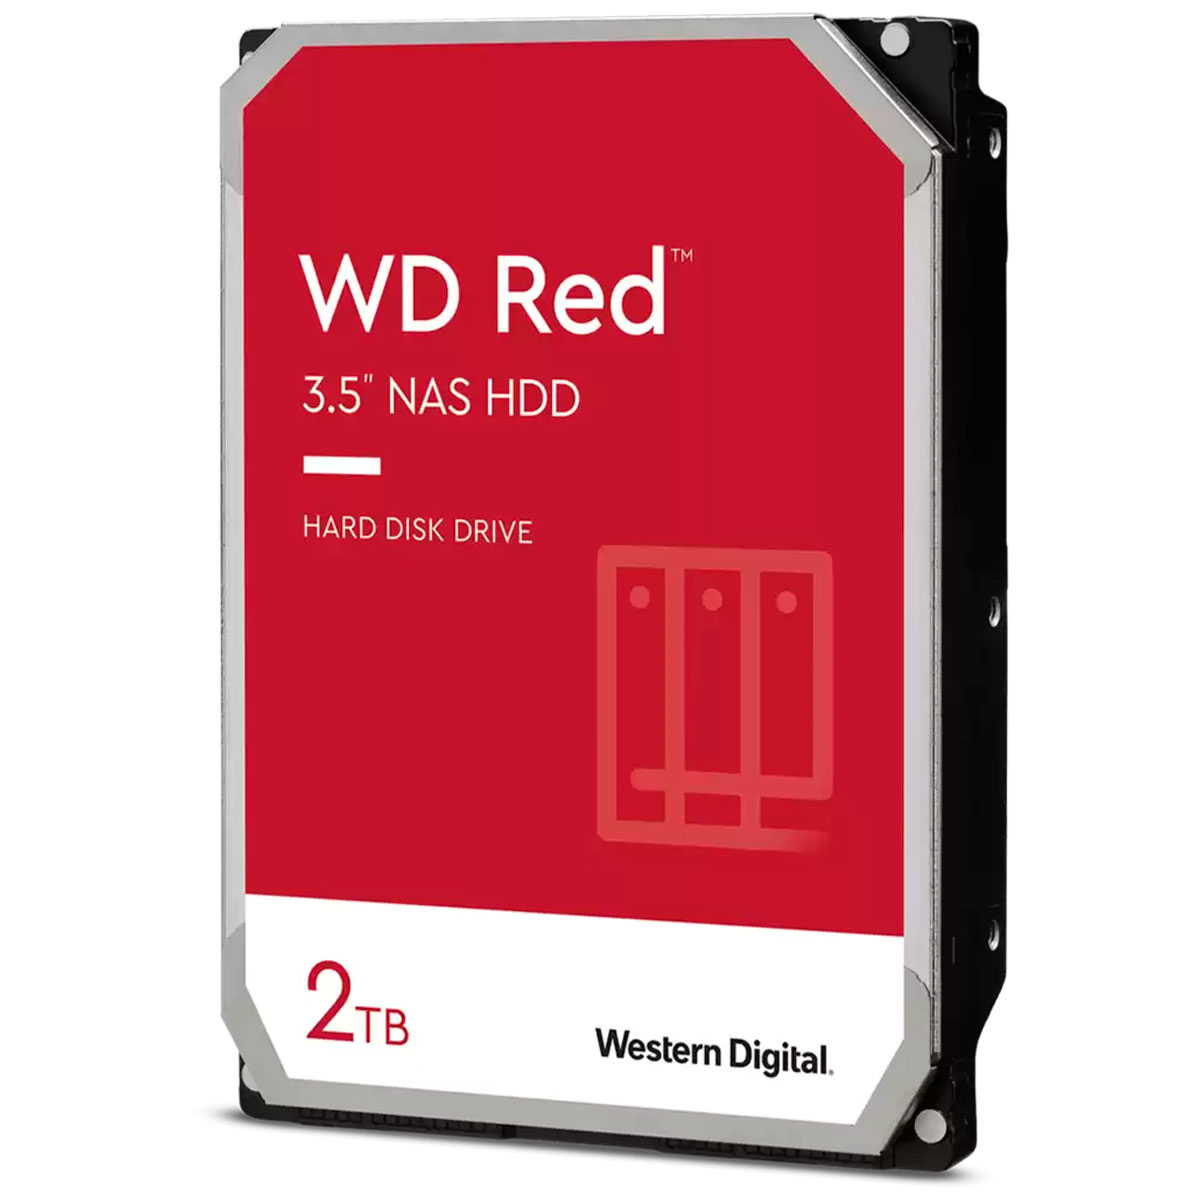 HD 2TB Western Digital WD Red, SATA III 6Gb/s, Cache 64MB, 3.5